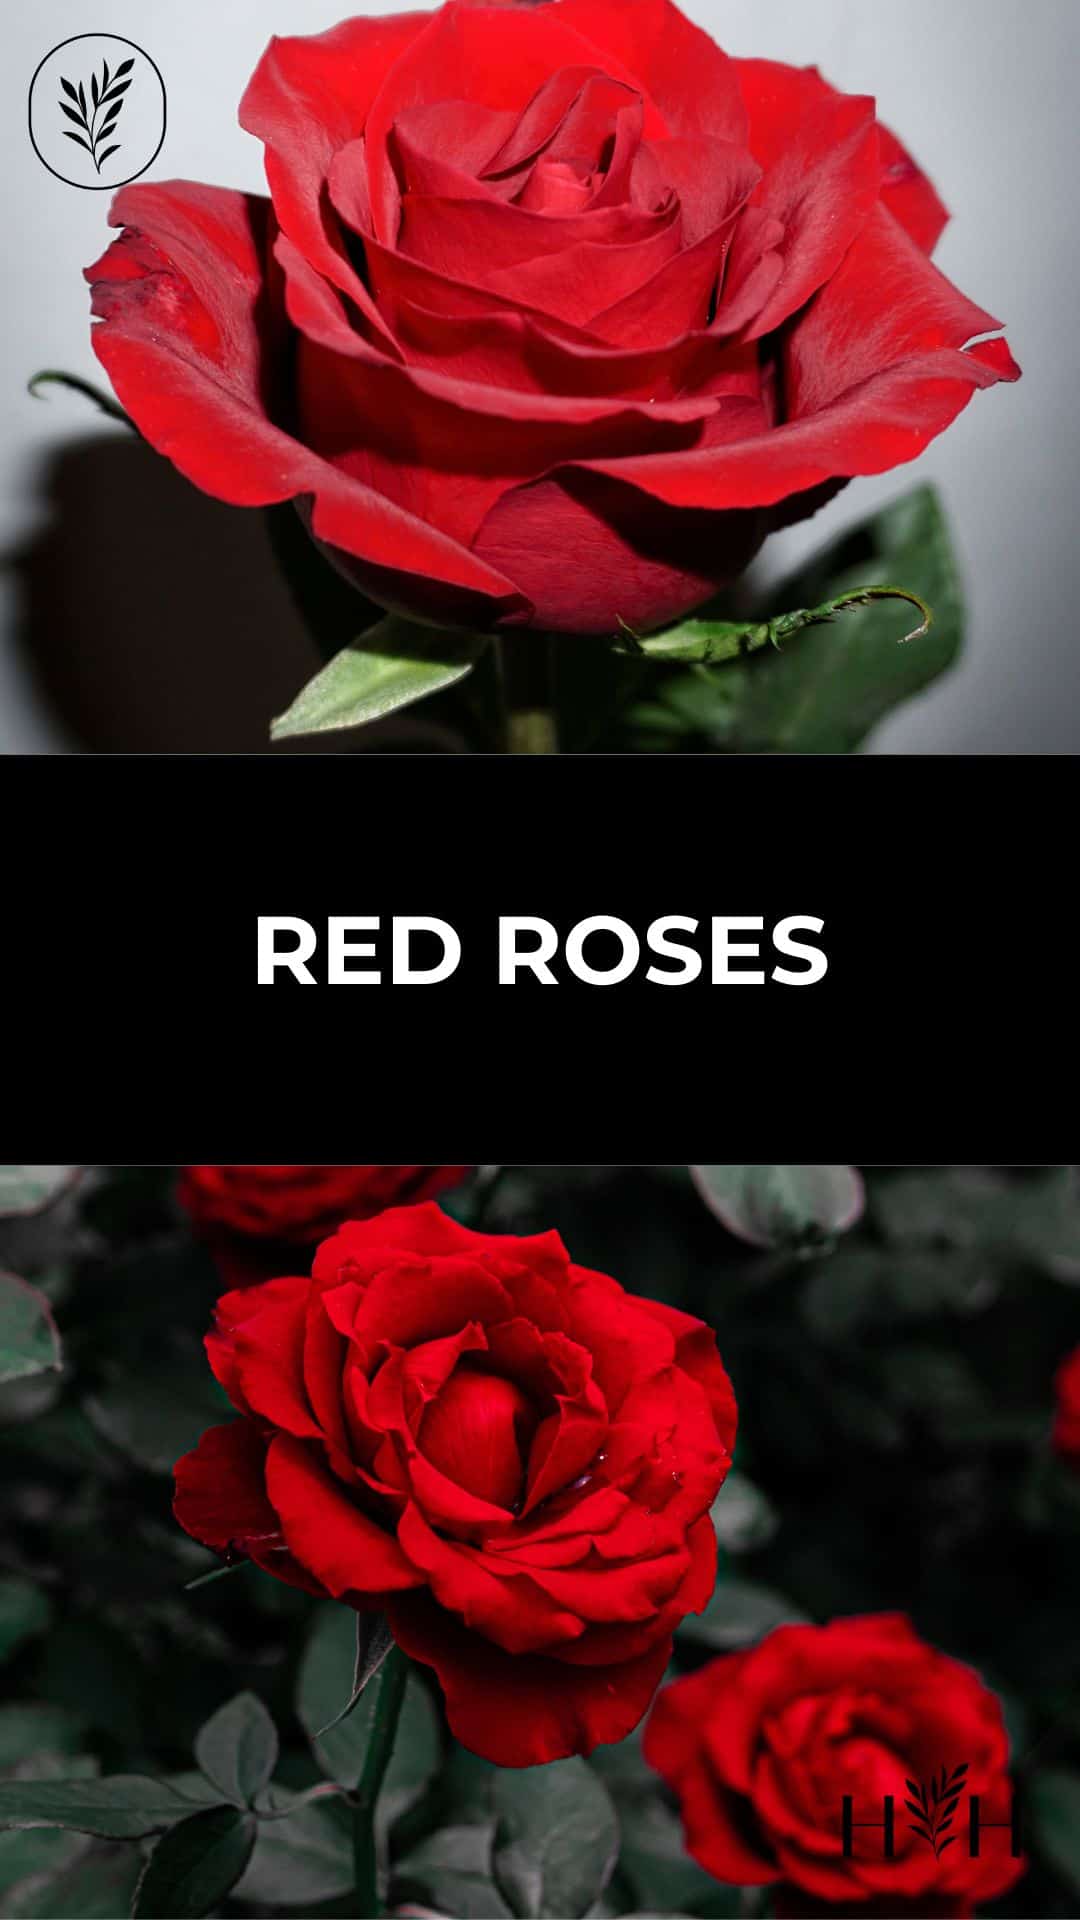 Red roses via @home4theharvest